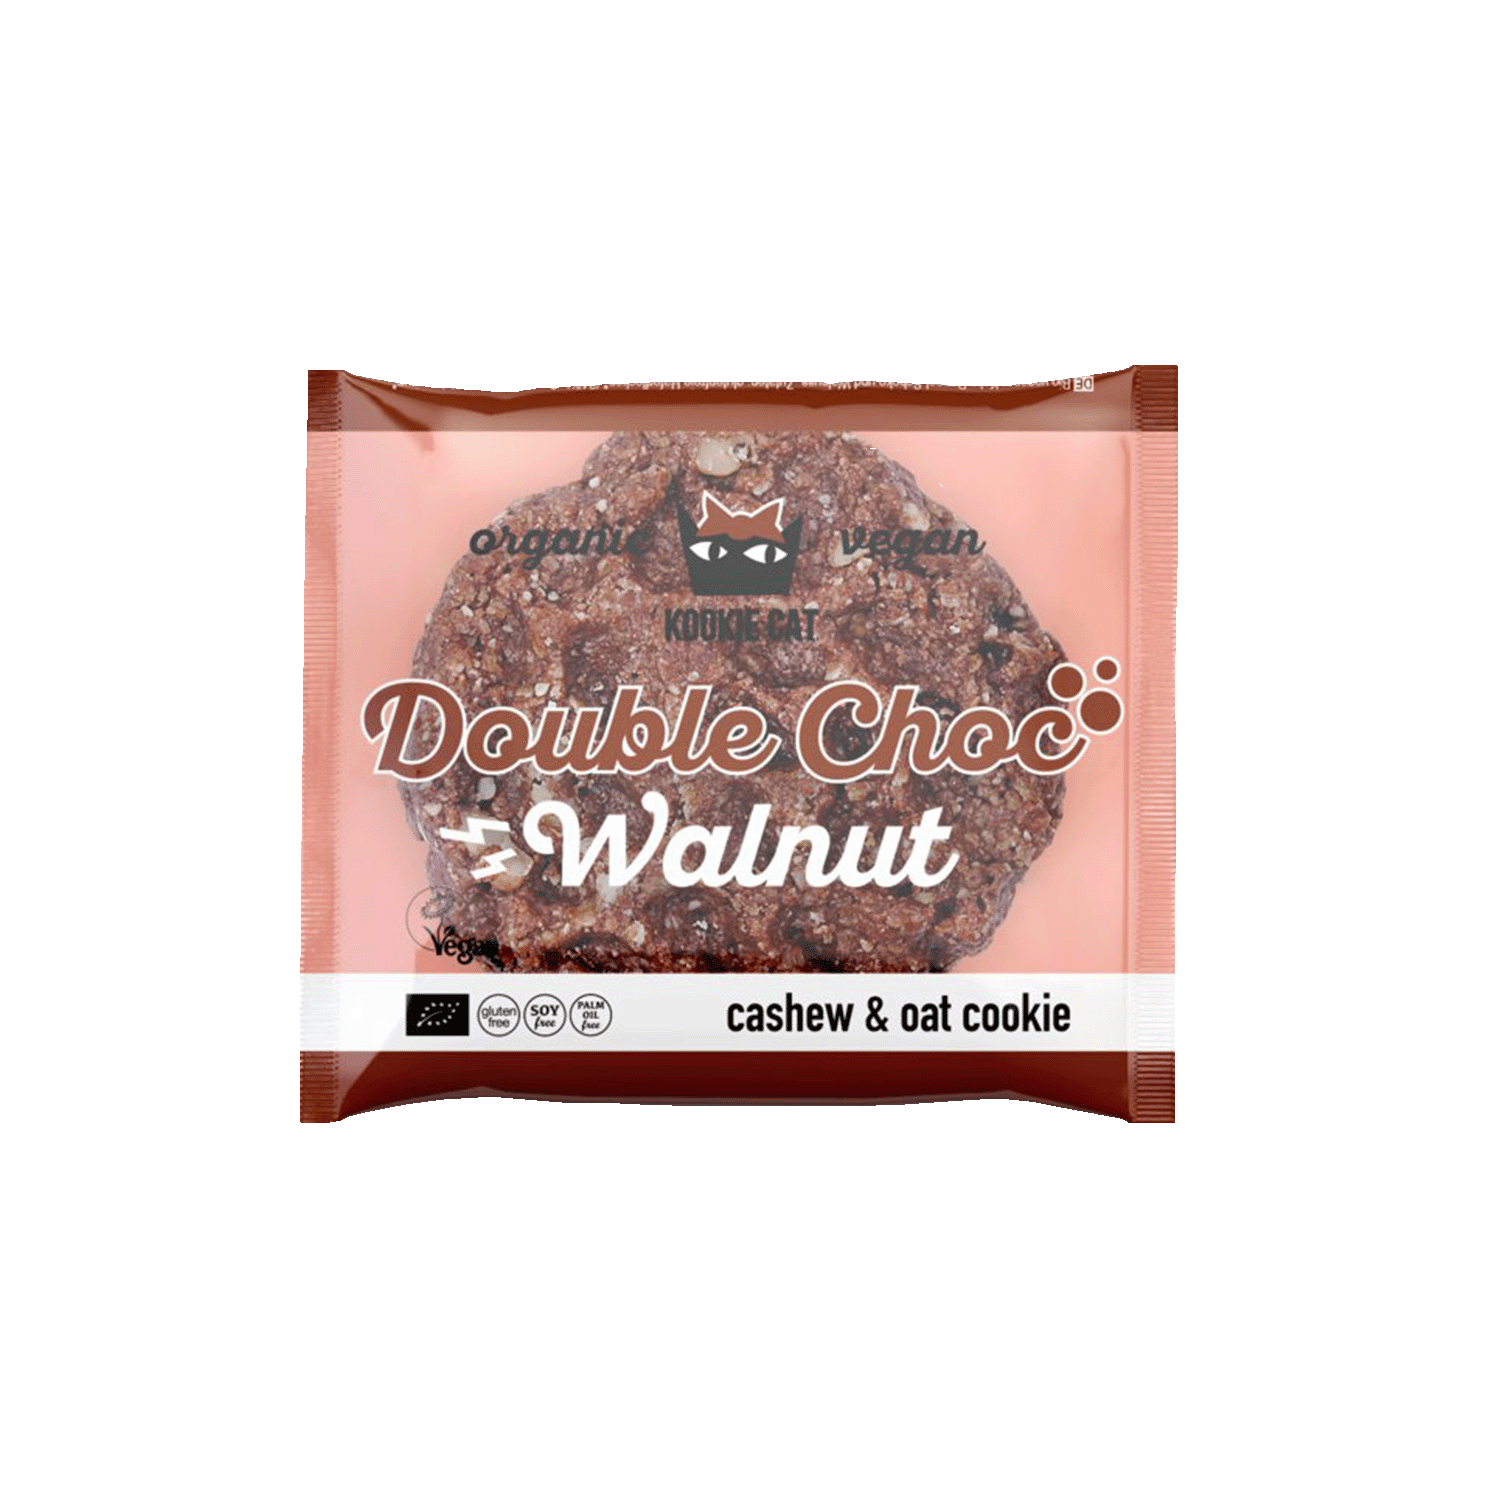 Cashew-Oat-Cookie Double Choc Walnut, Organic, 50g